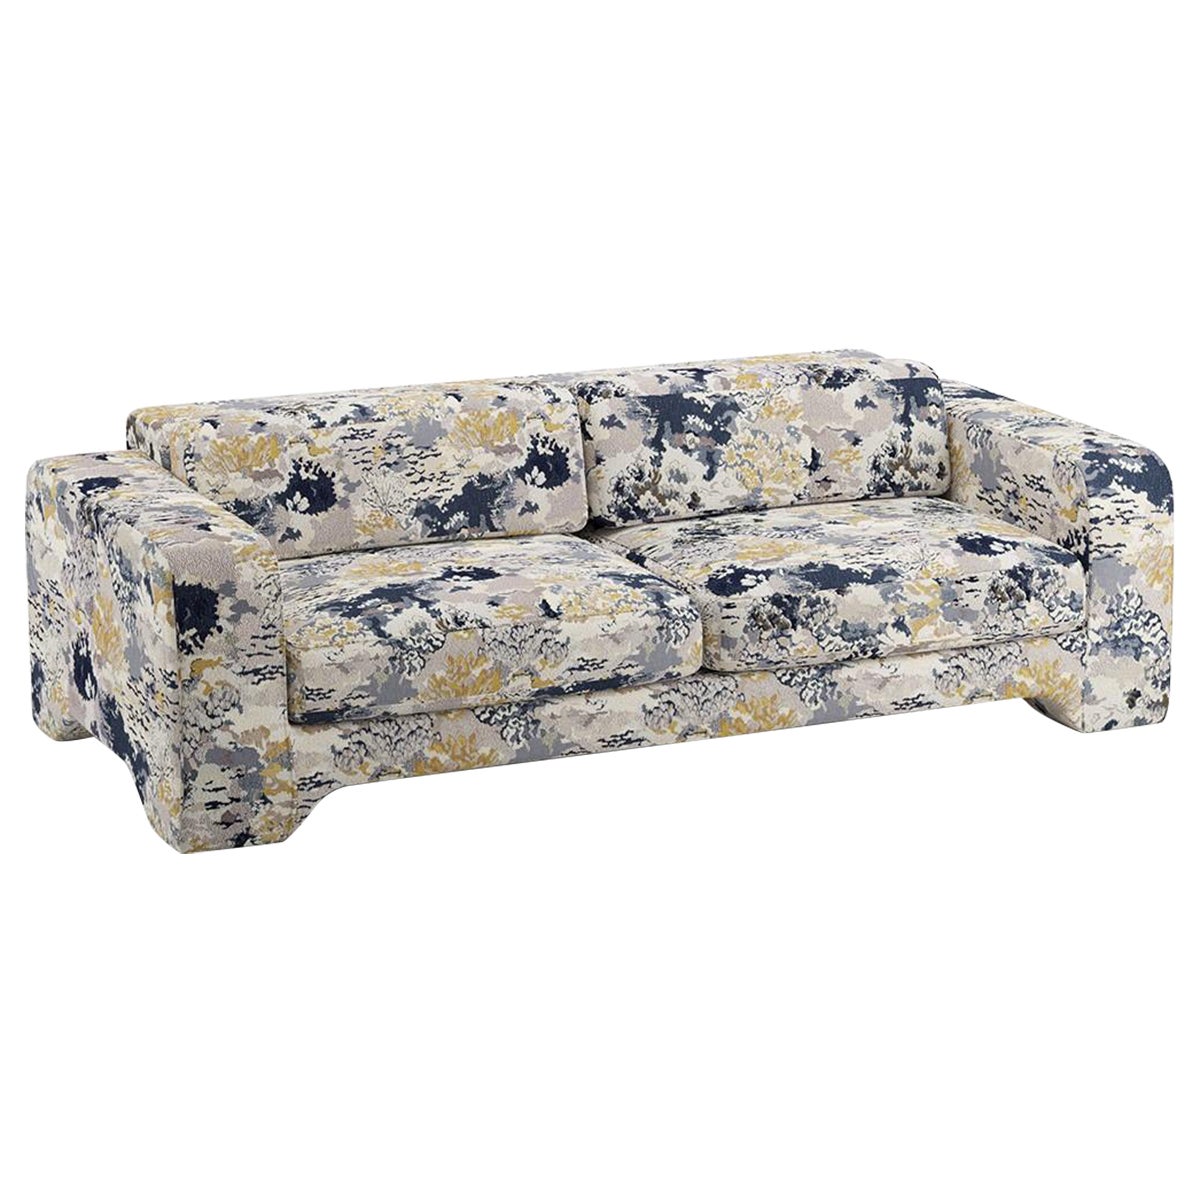 Popus Editions Giovanna 2.5 Seater Sofa in Indigo Marrakech Jacquard Fabric